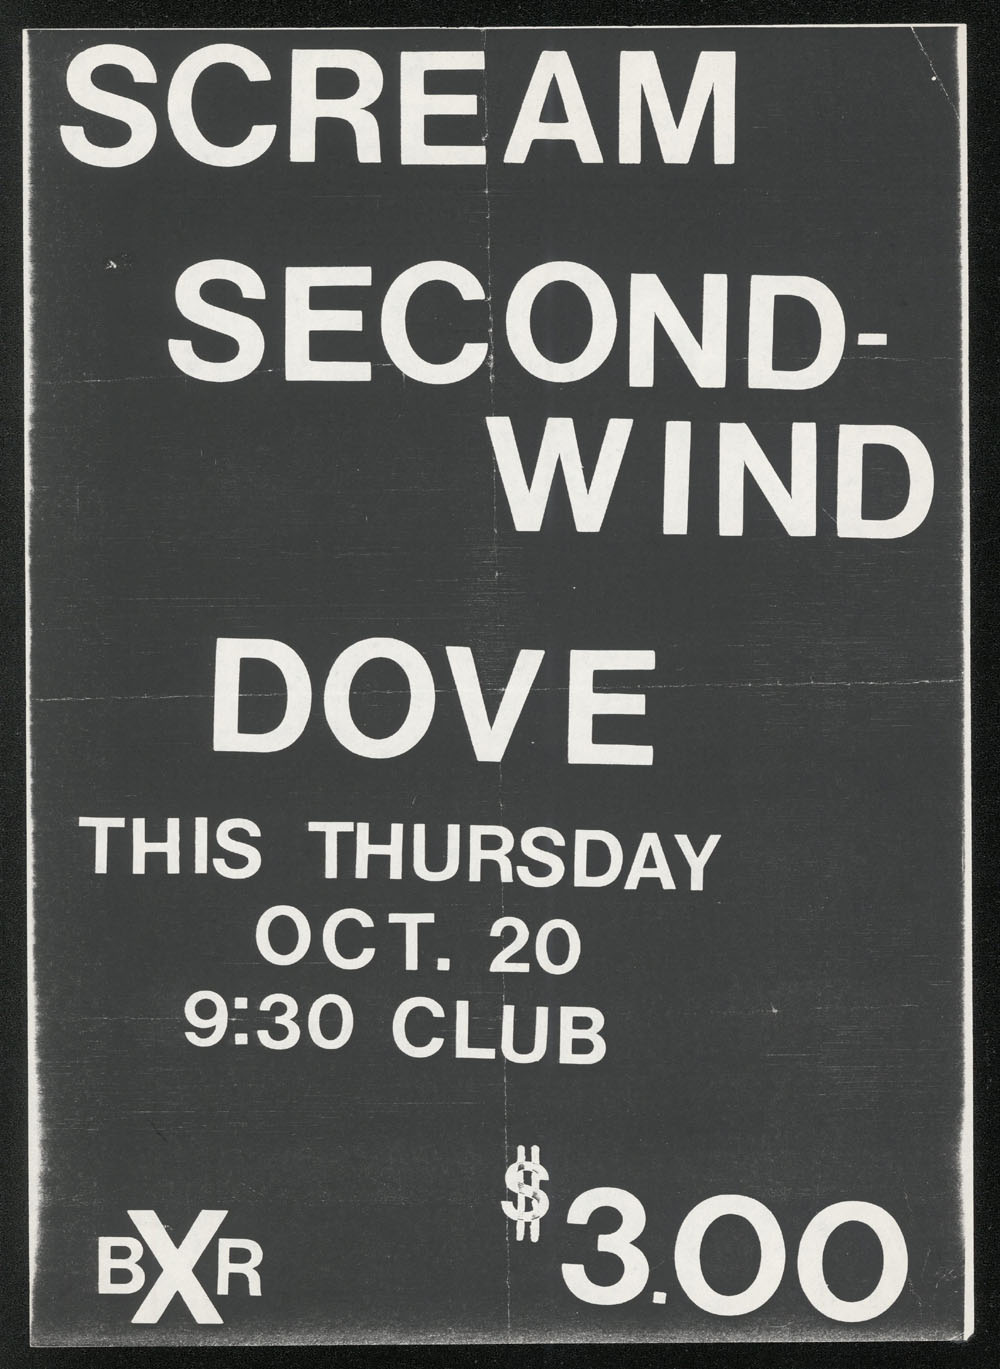 SCREAM w/ Second Wind, Dove at 9:30 Club